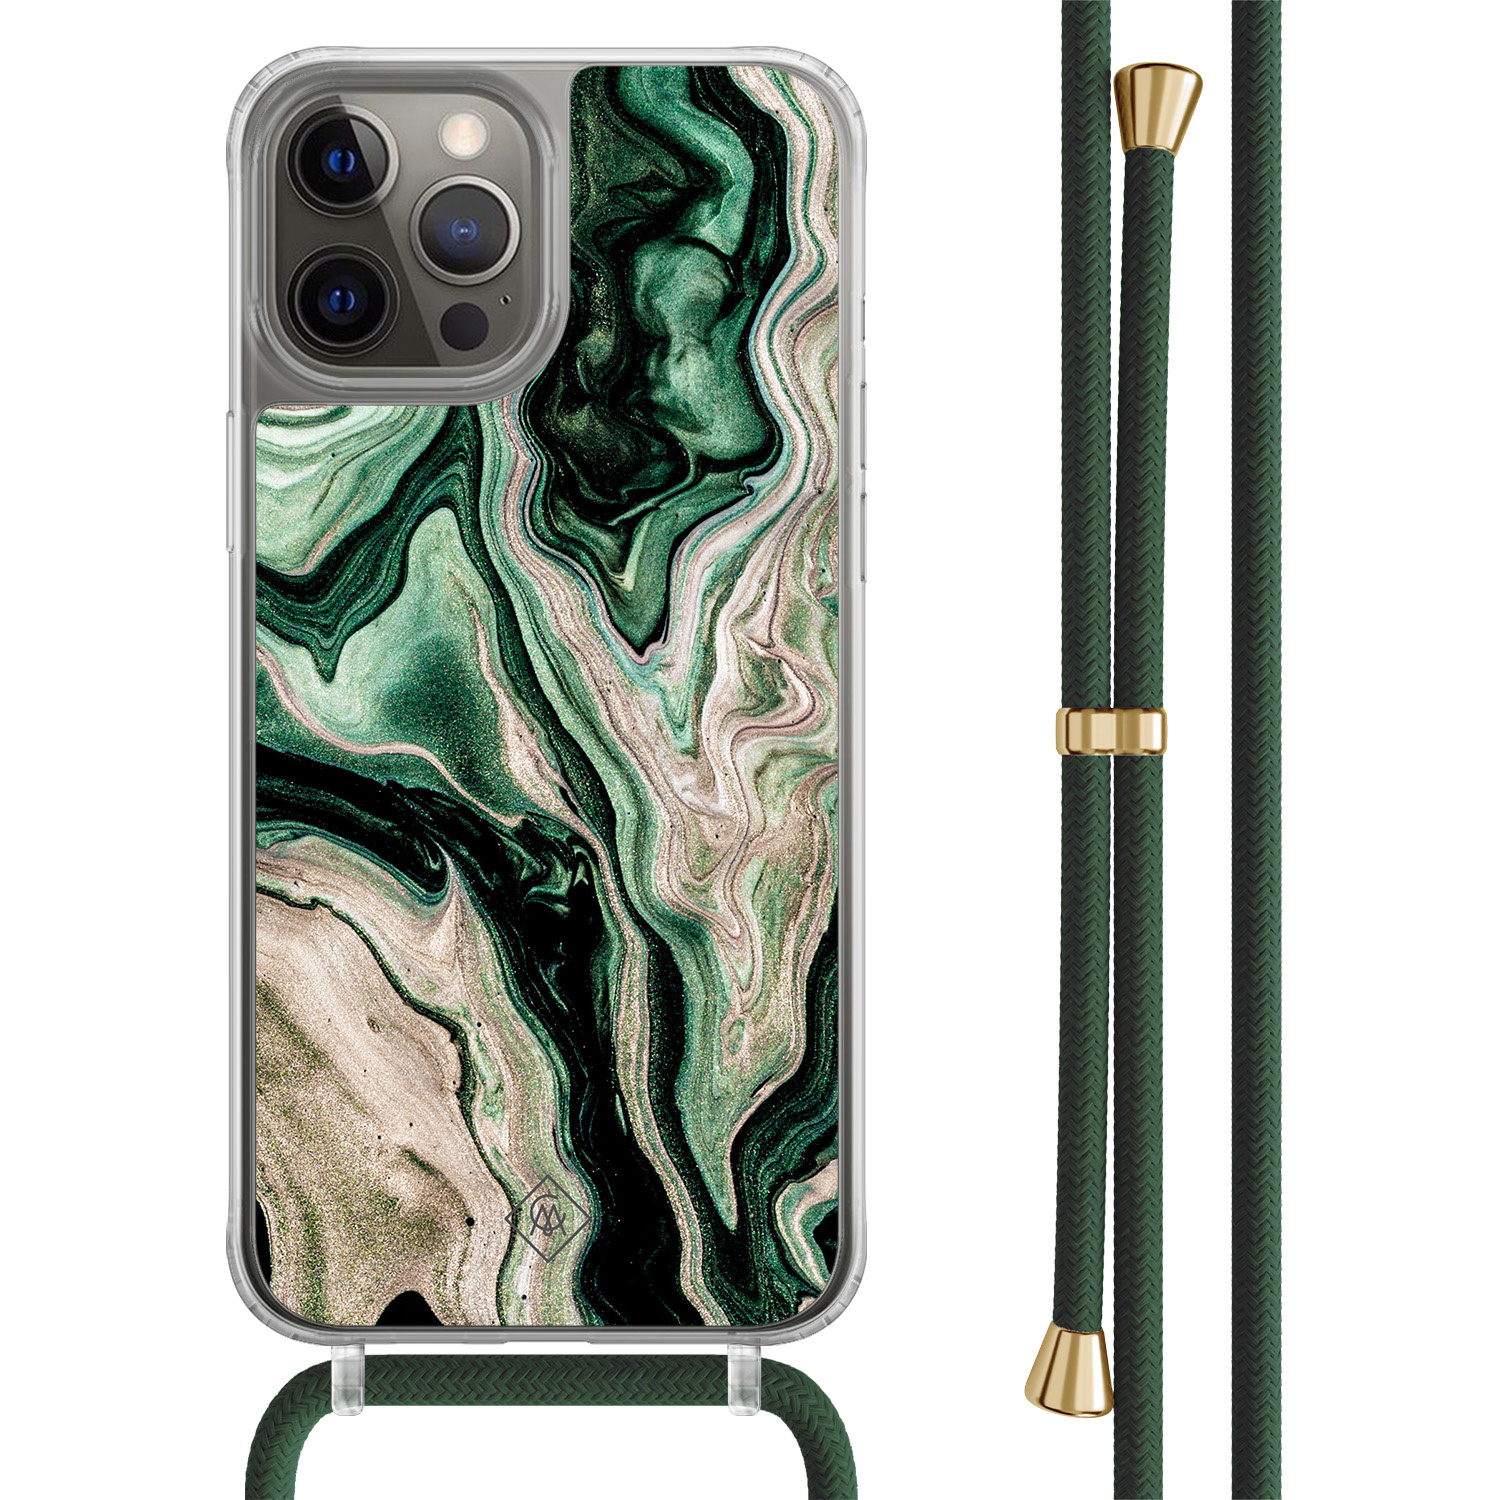 iPhone 12 (Pro) hoesje met groen koord - Green waves